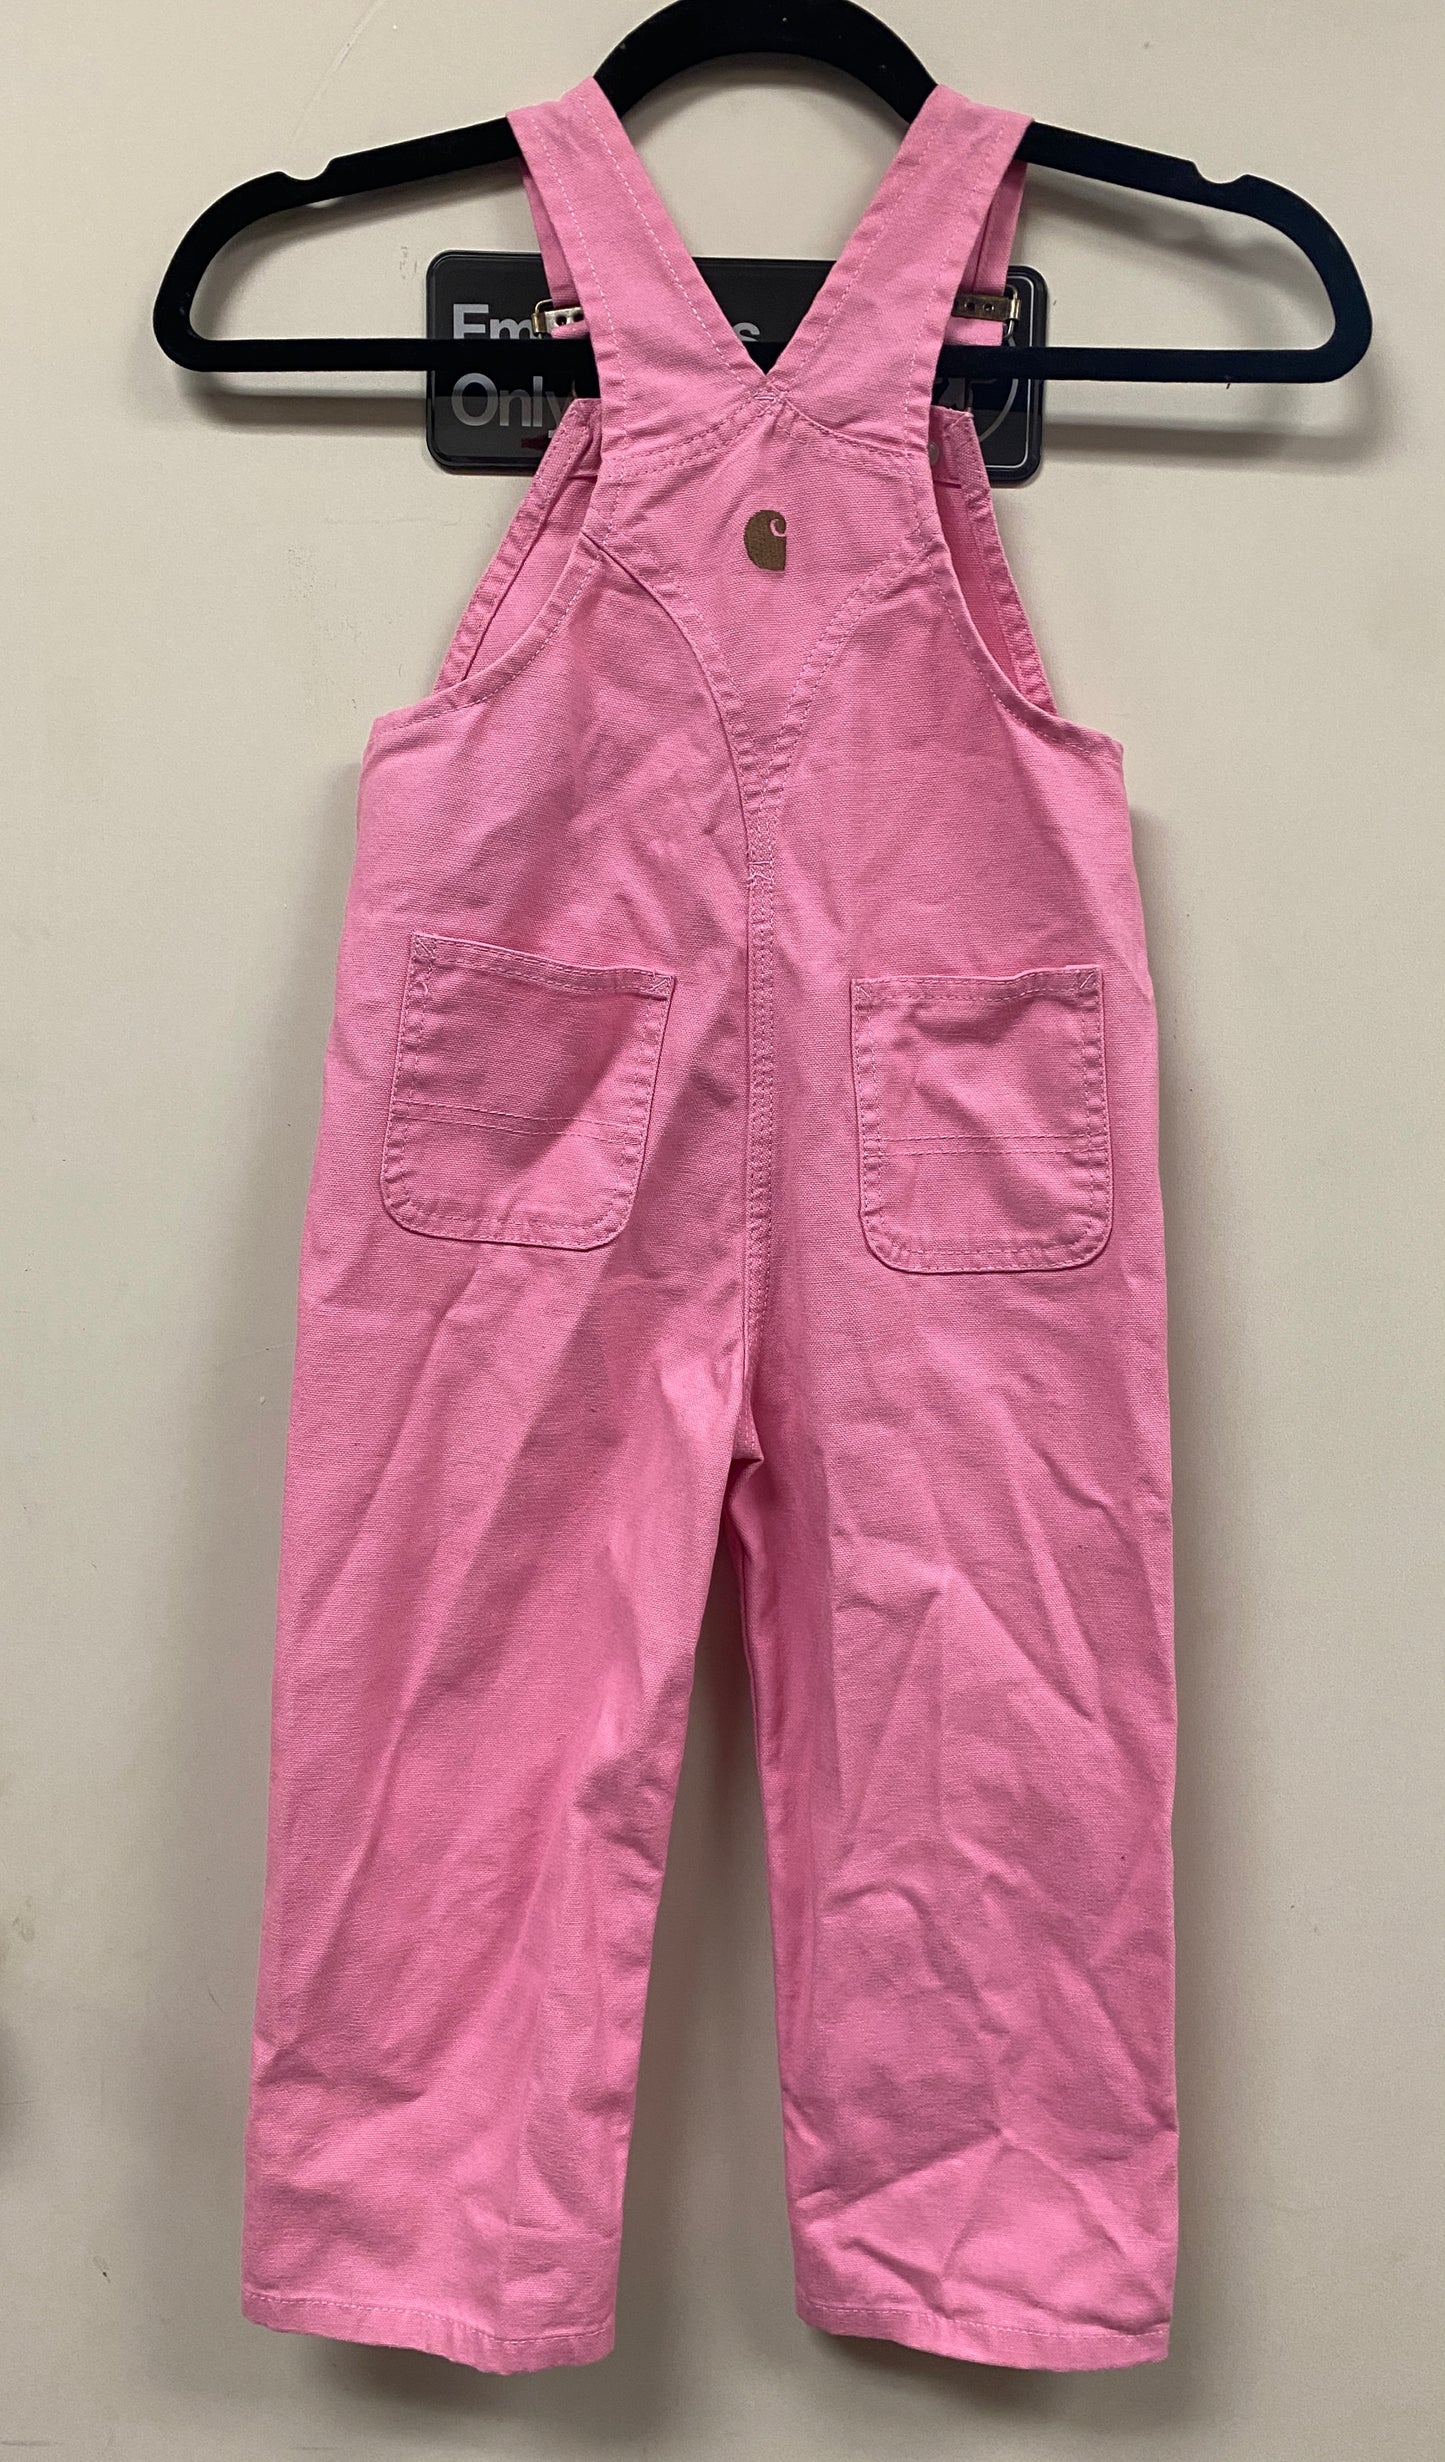 3T Pink Carhartt Overalls